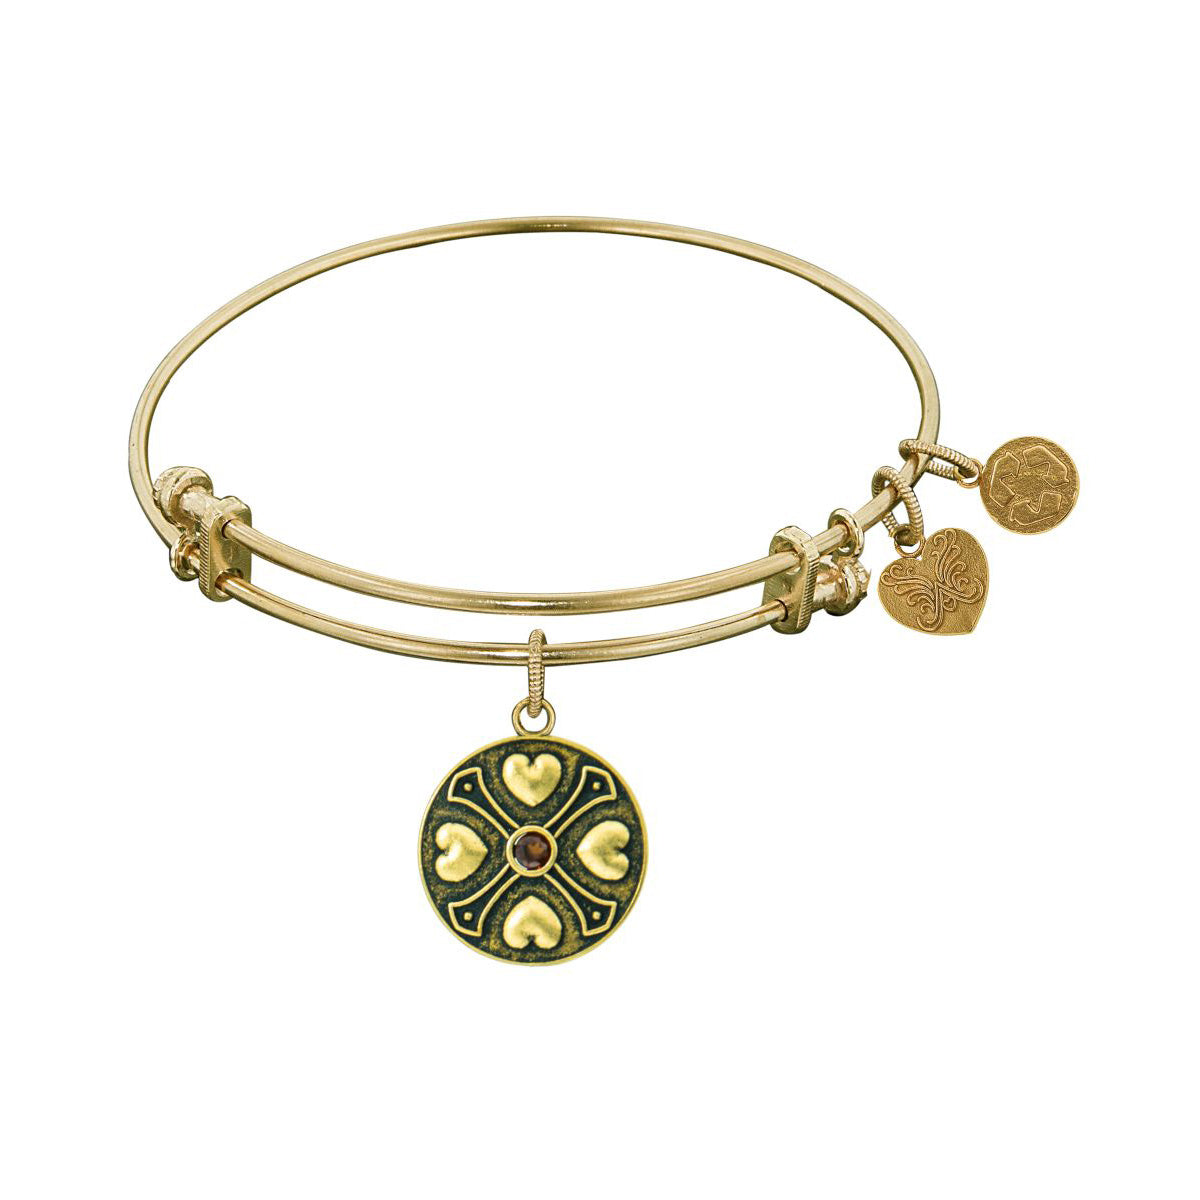 Finish Brass January Birthstone Angelica Bangle Bracelet, 7.25" fine designer jewelry for men and women